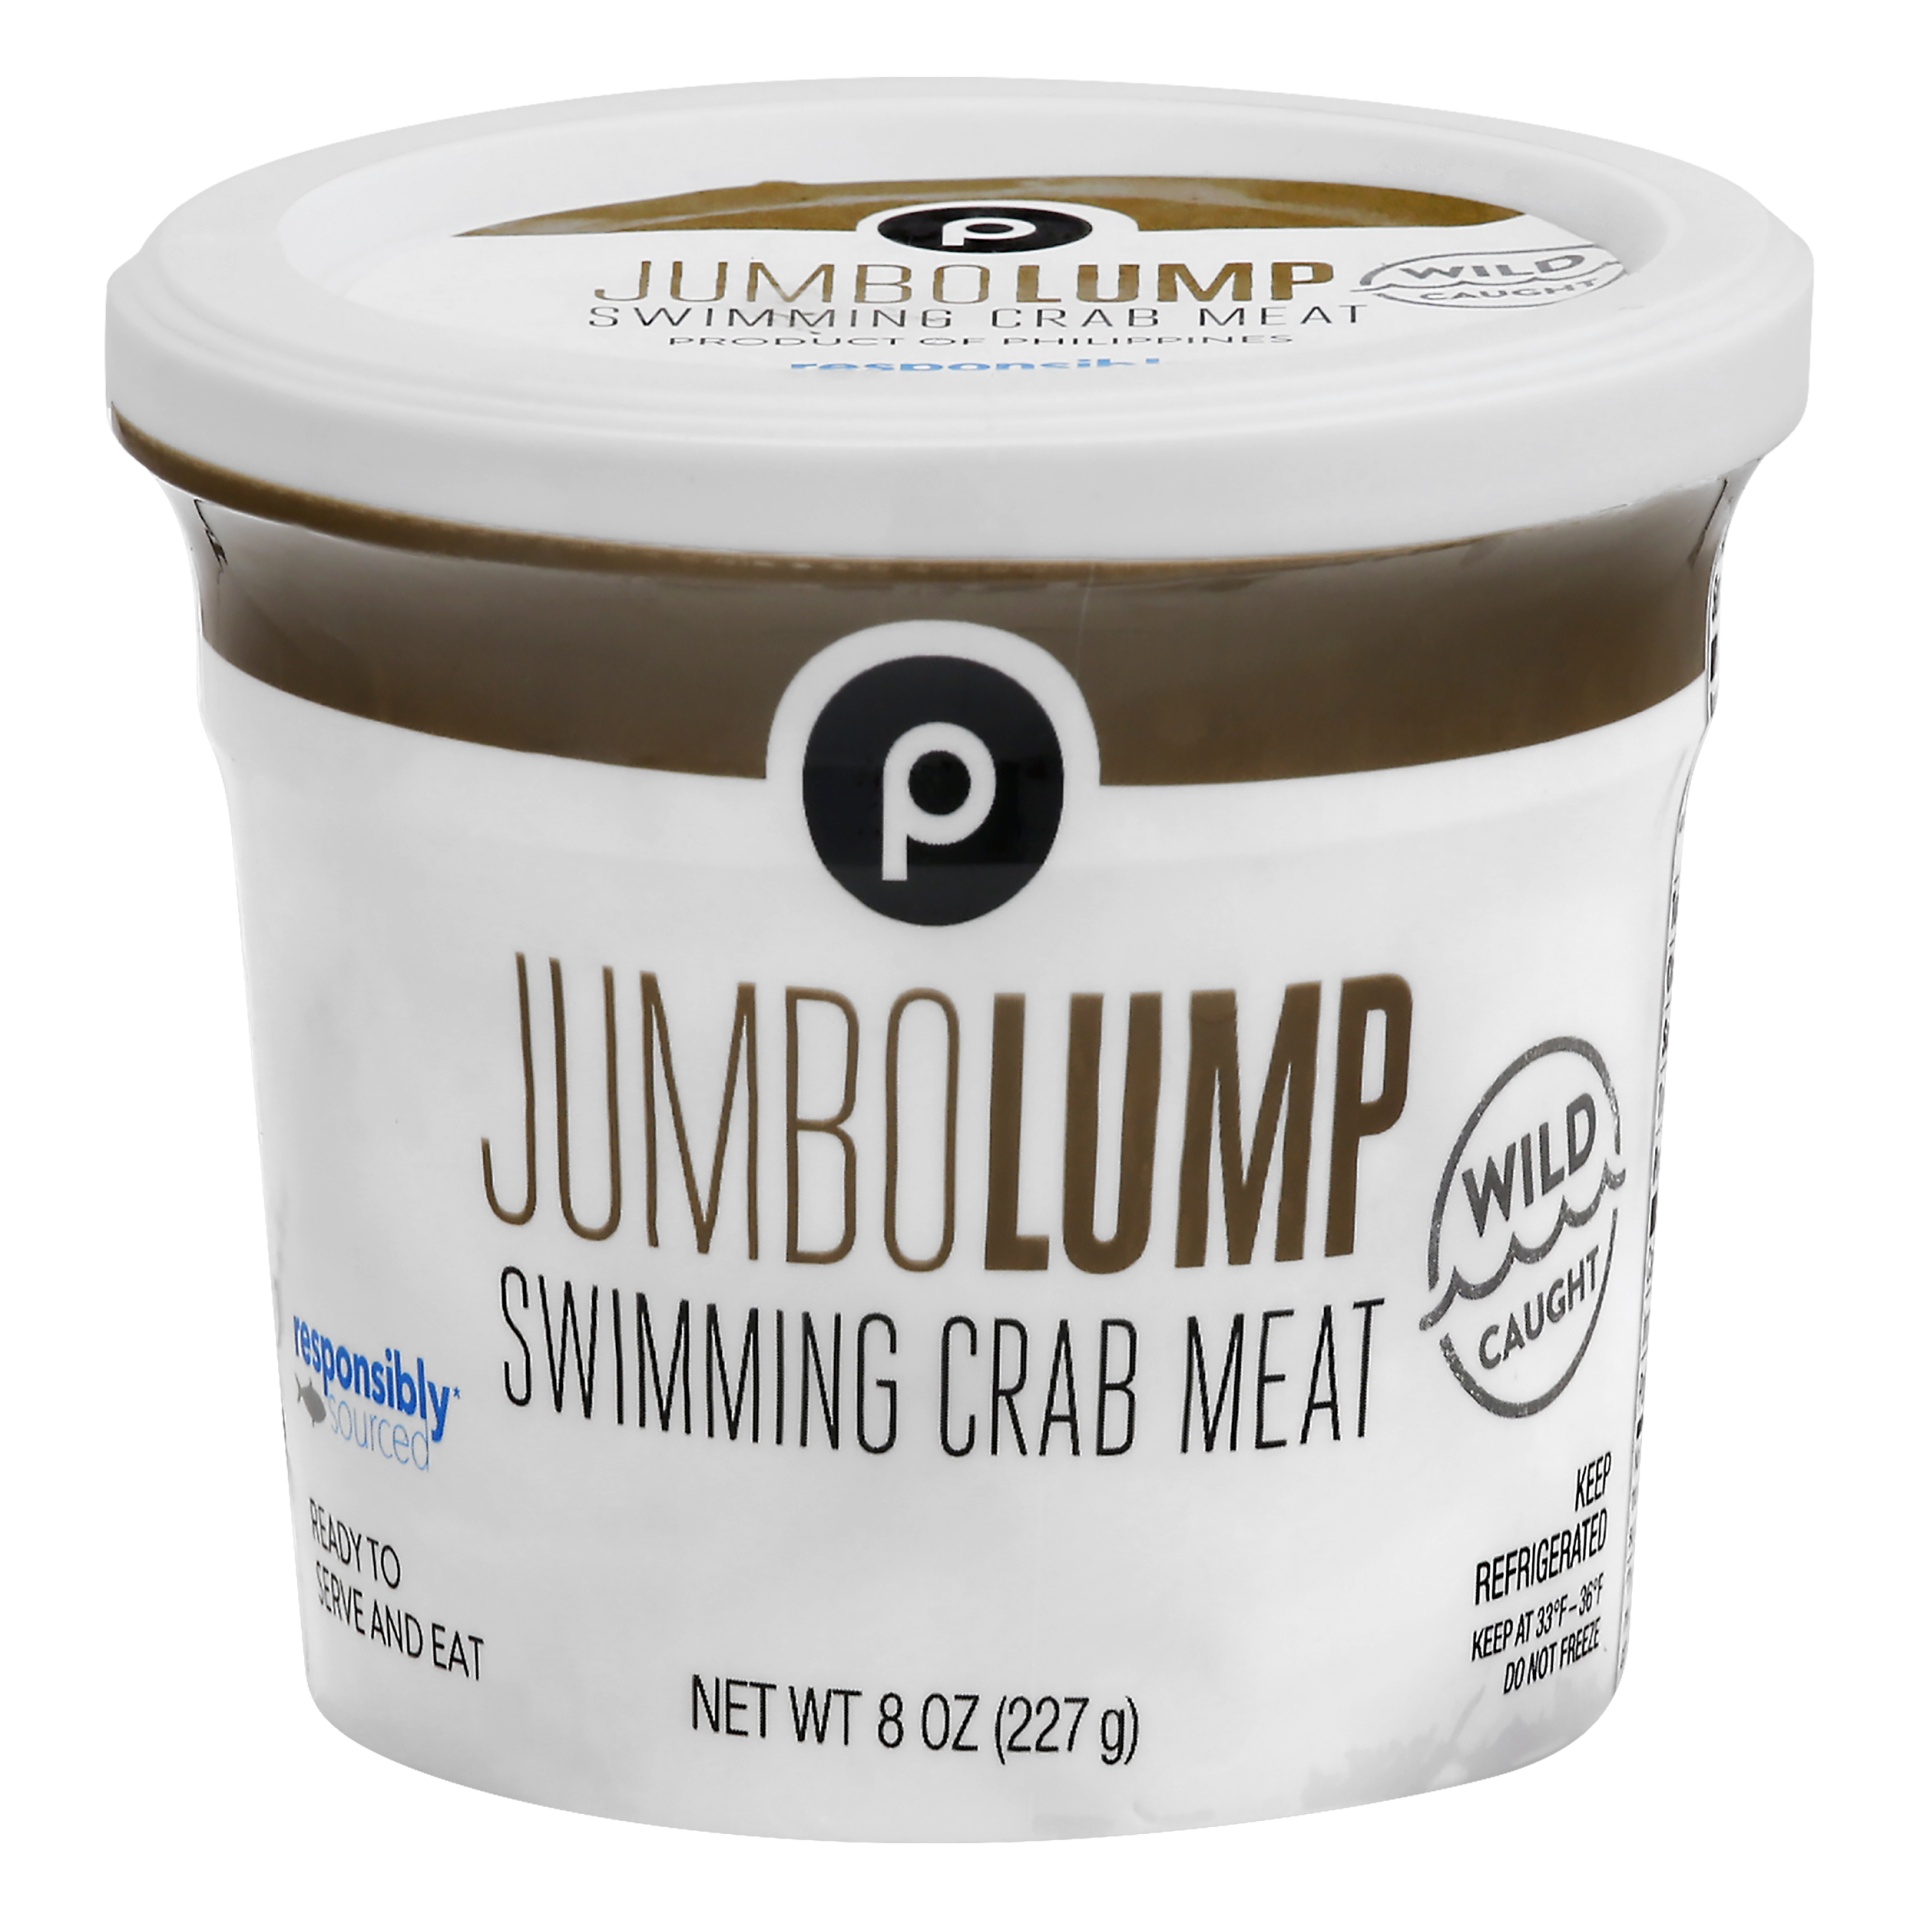 slide 1 of 1, Publix Jumbo Lump Swimming Crab Meat, 8 oz